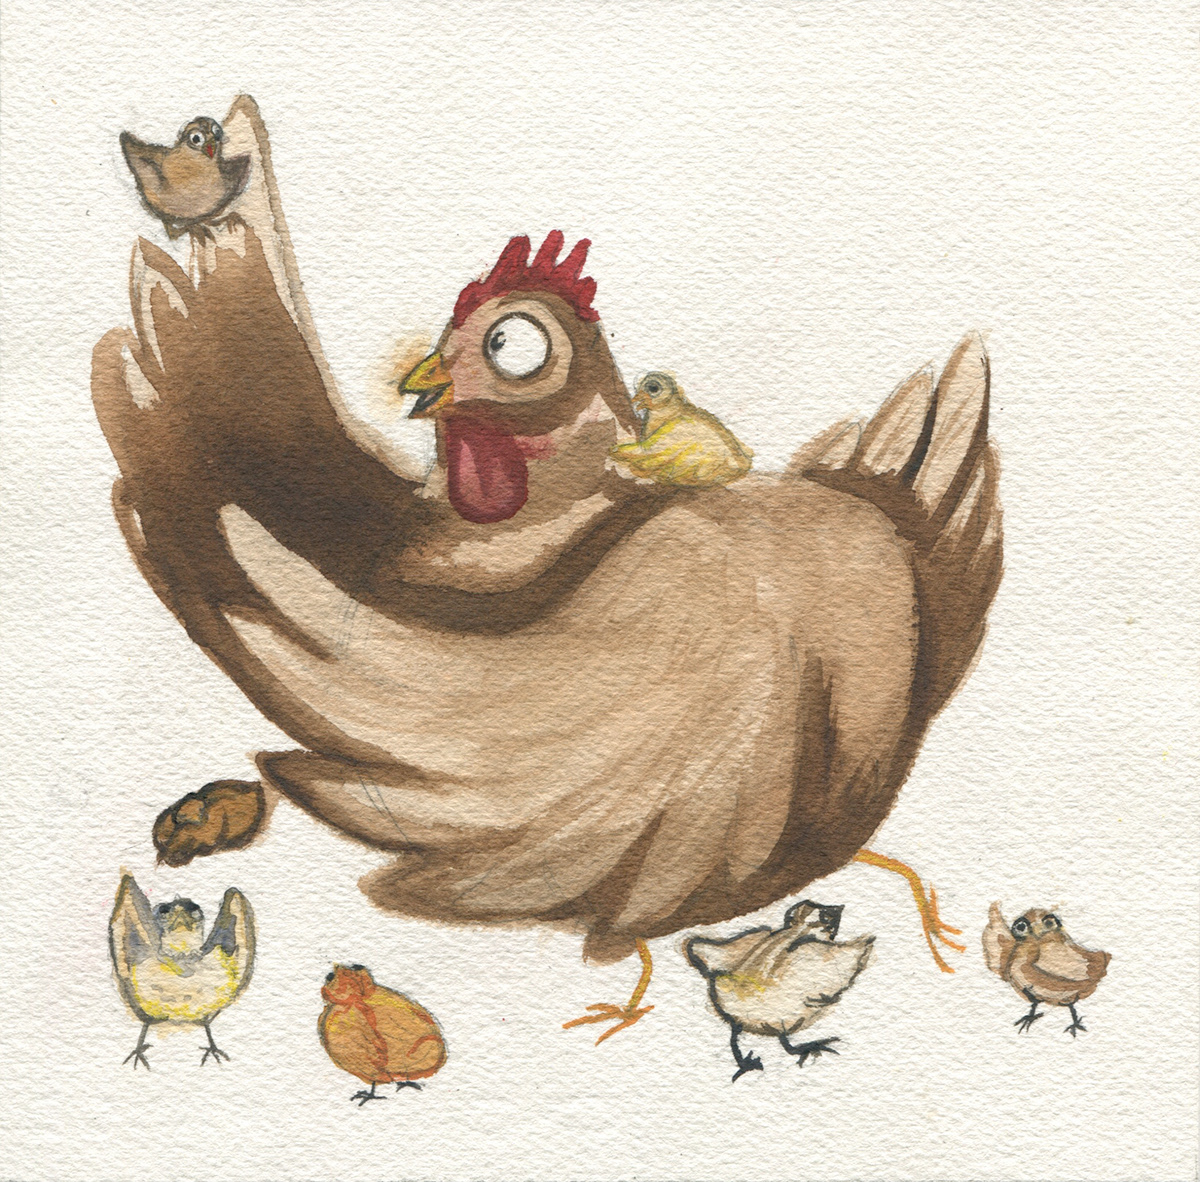 Mother Hen chicken illustration baby chicks farm animals animal story